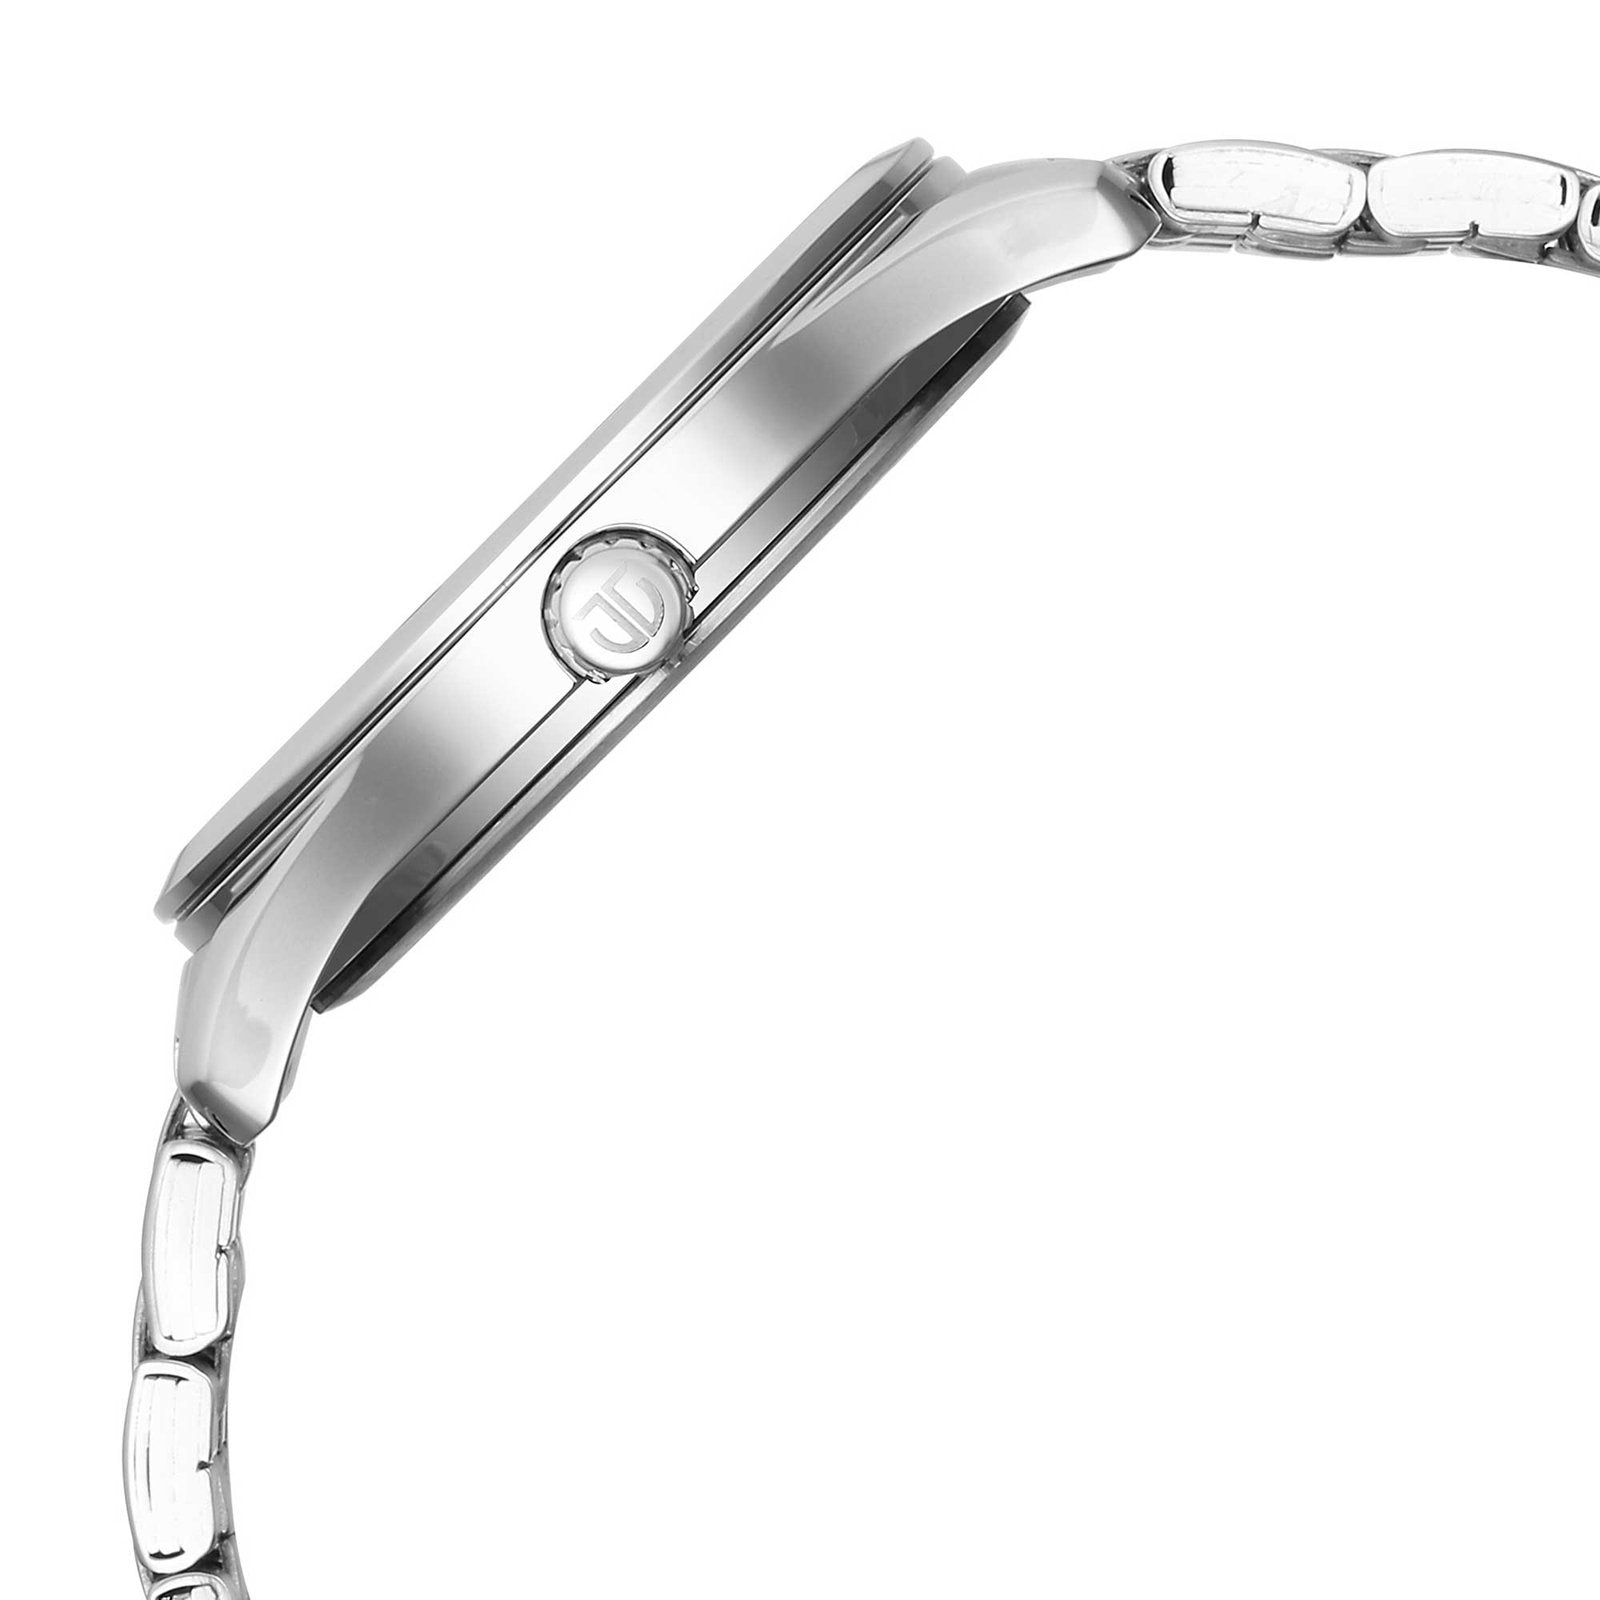 Shop Now Titan Analog Metal Strap for Men's Watch | Watches & Accessories | Best Watches in Bahrain | Halabh.com